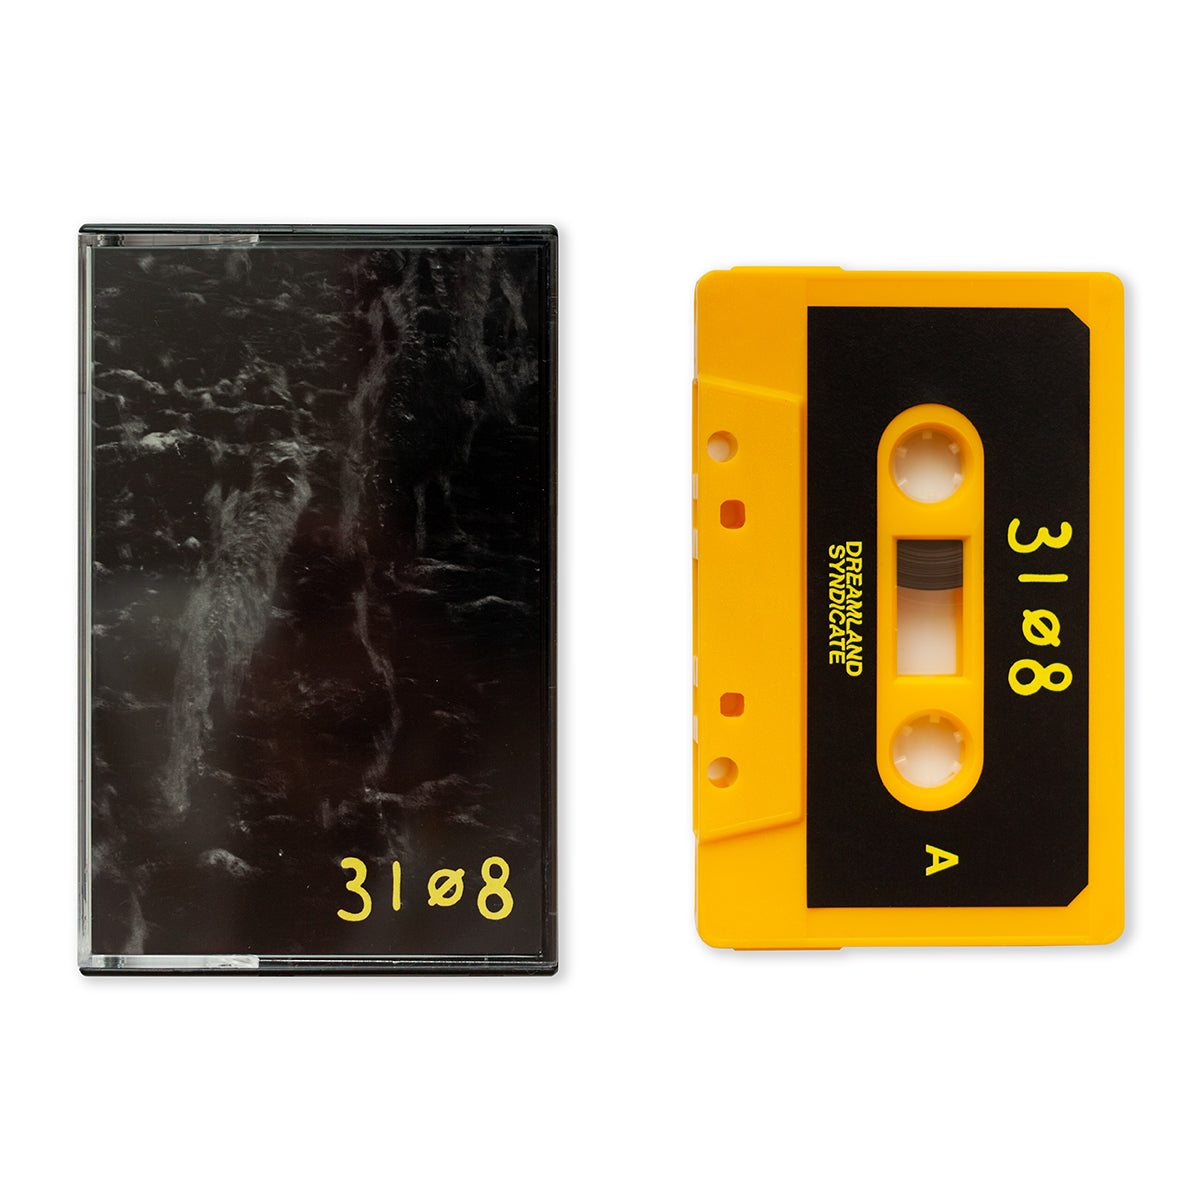 31Ø8 - Cassette Tape - Dreamland Syndicate